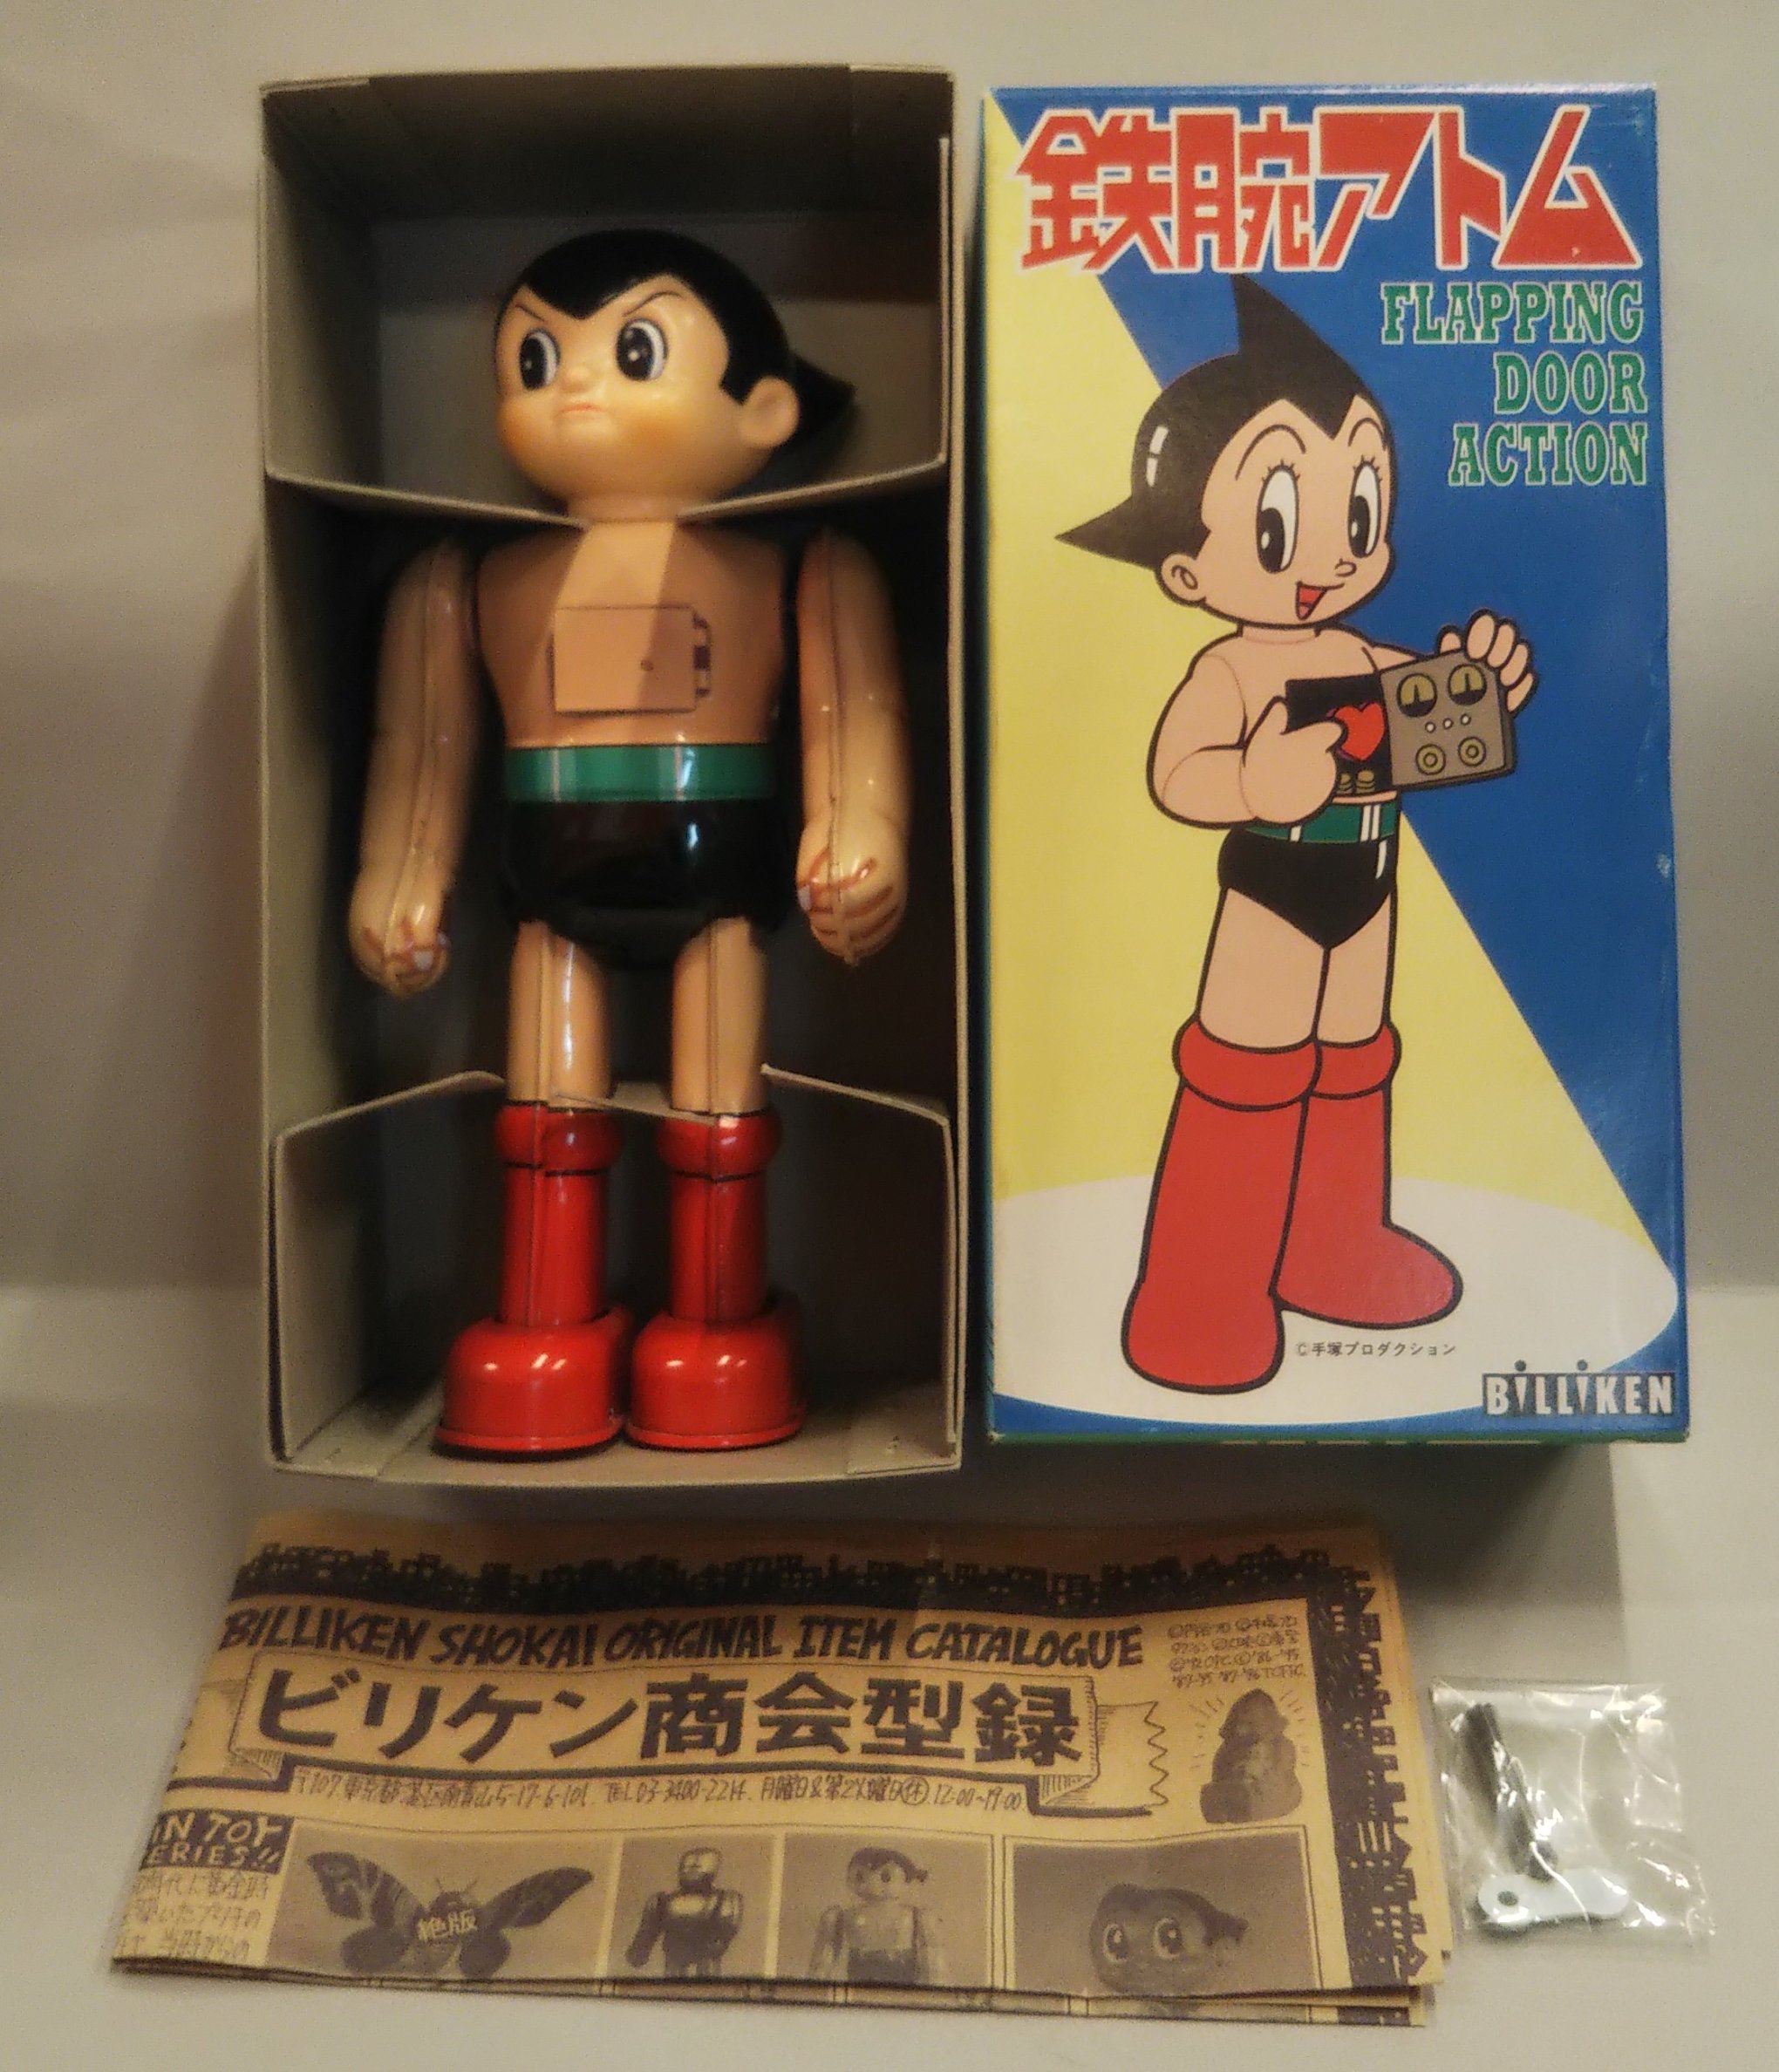 Billiken Shokai Wind Up Walking Tin Toy Astro Boy (Tetsuwan Atom